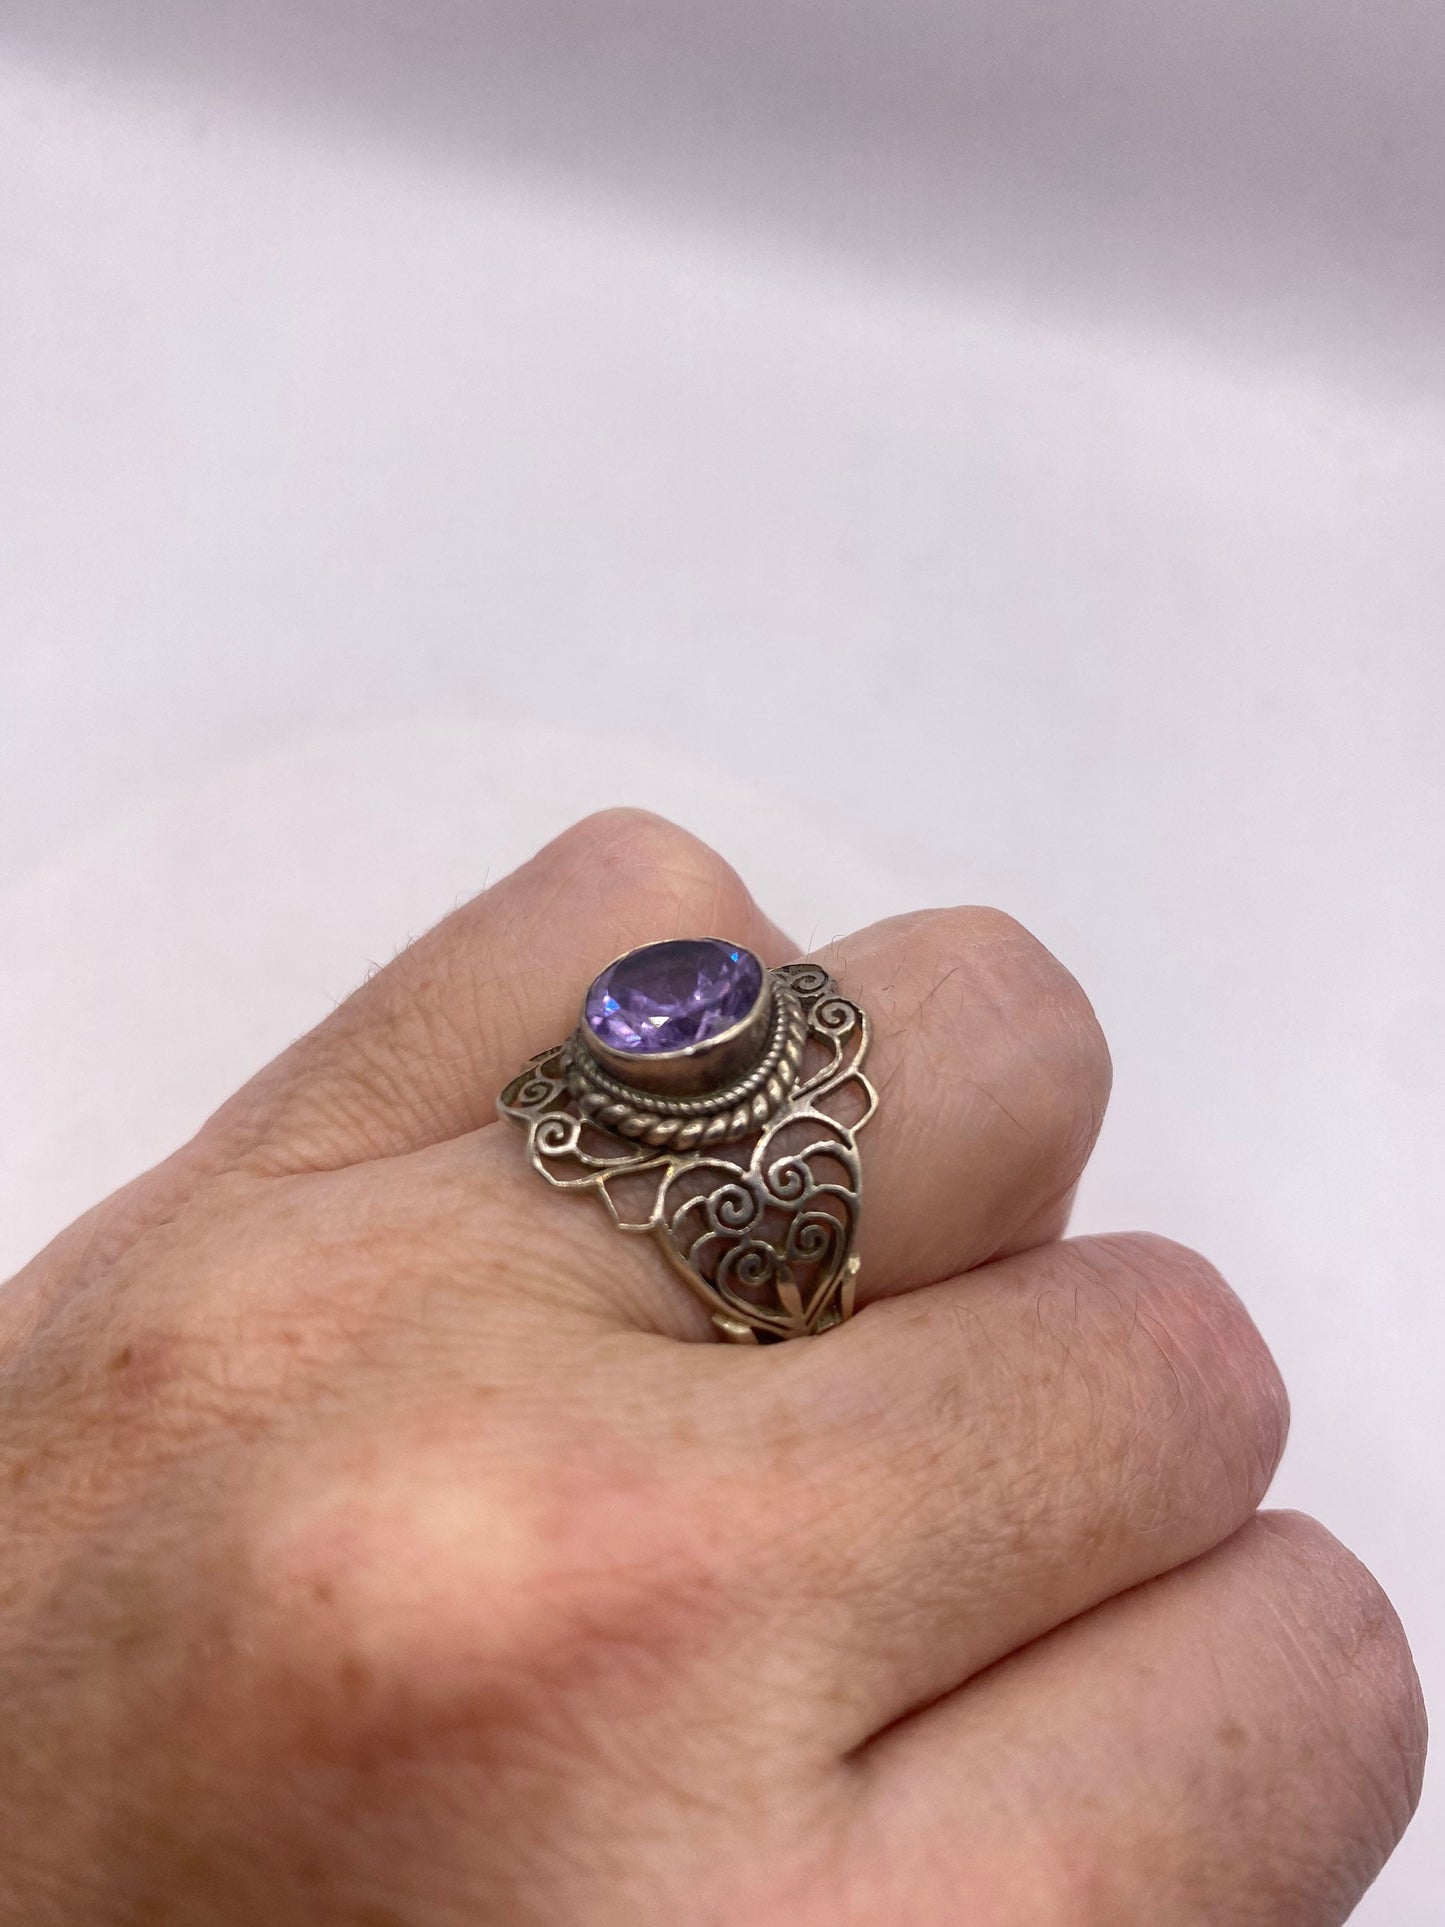 Vintage Purple Color Change Alexandrite 925 Sterling Silver Ring